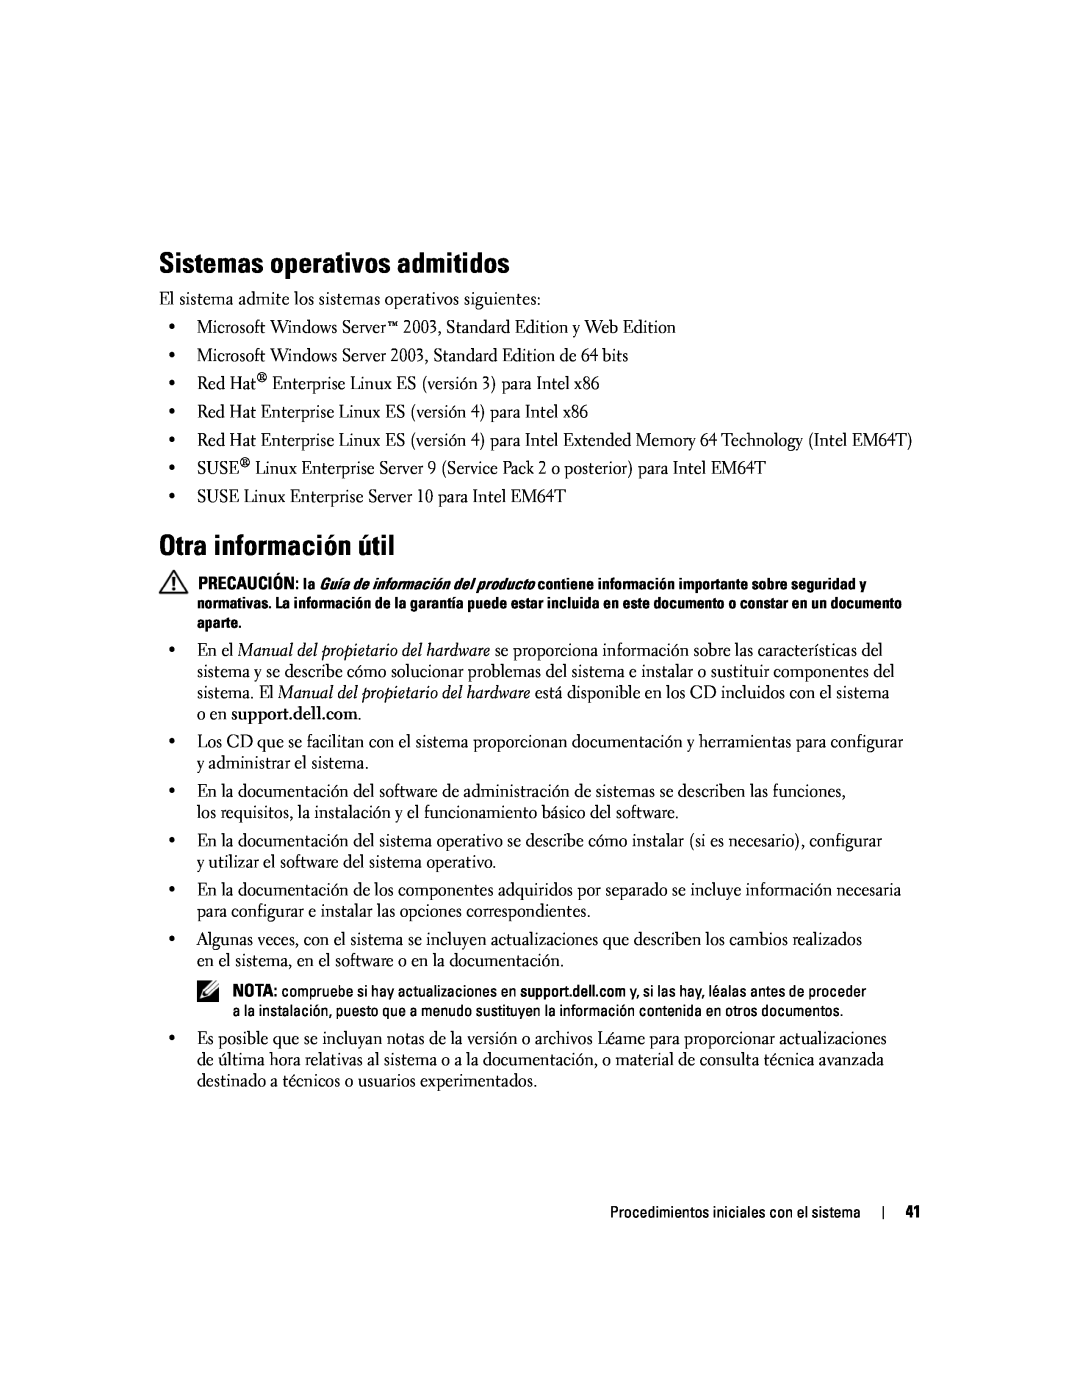 Dell MVT01 manual Sistemas operativos admitidos, Otra información útil 